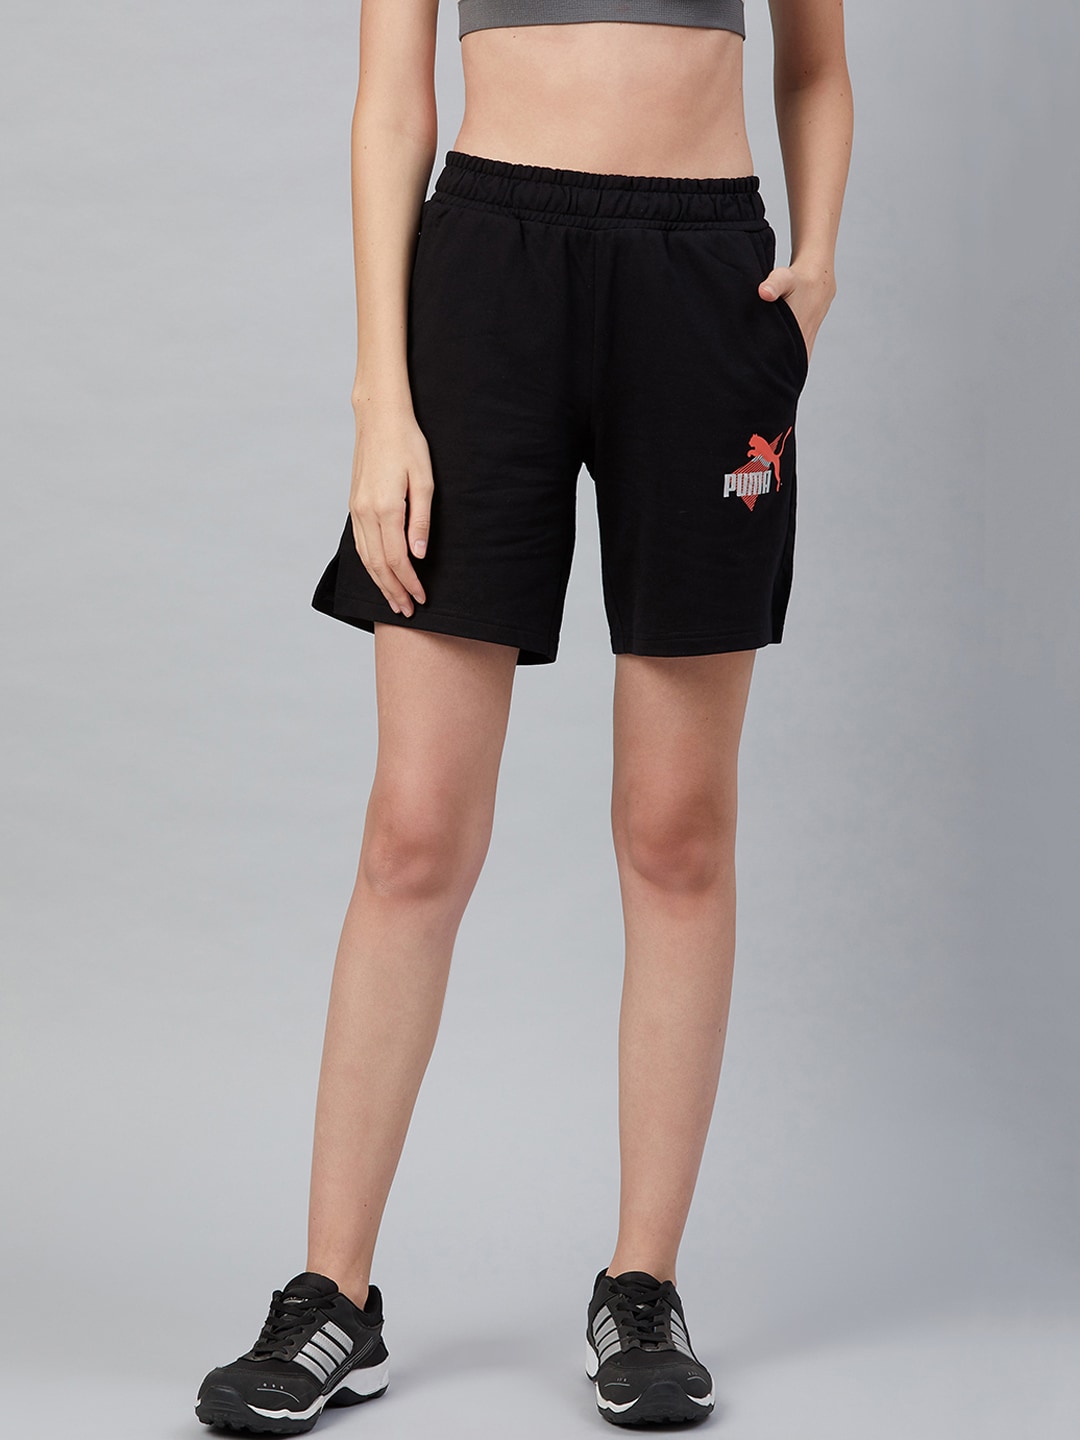 Puma Women Black Graphic 7 Solid Shorts Price in India